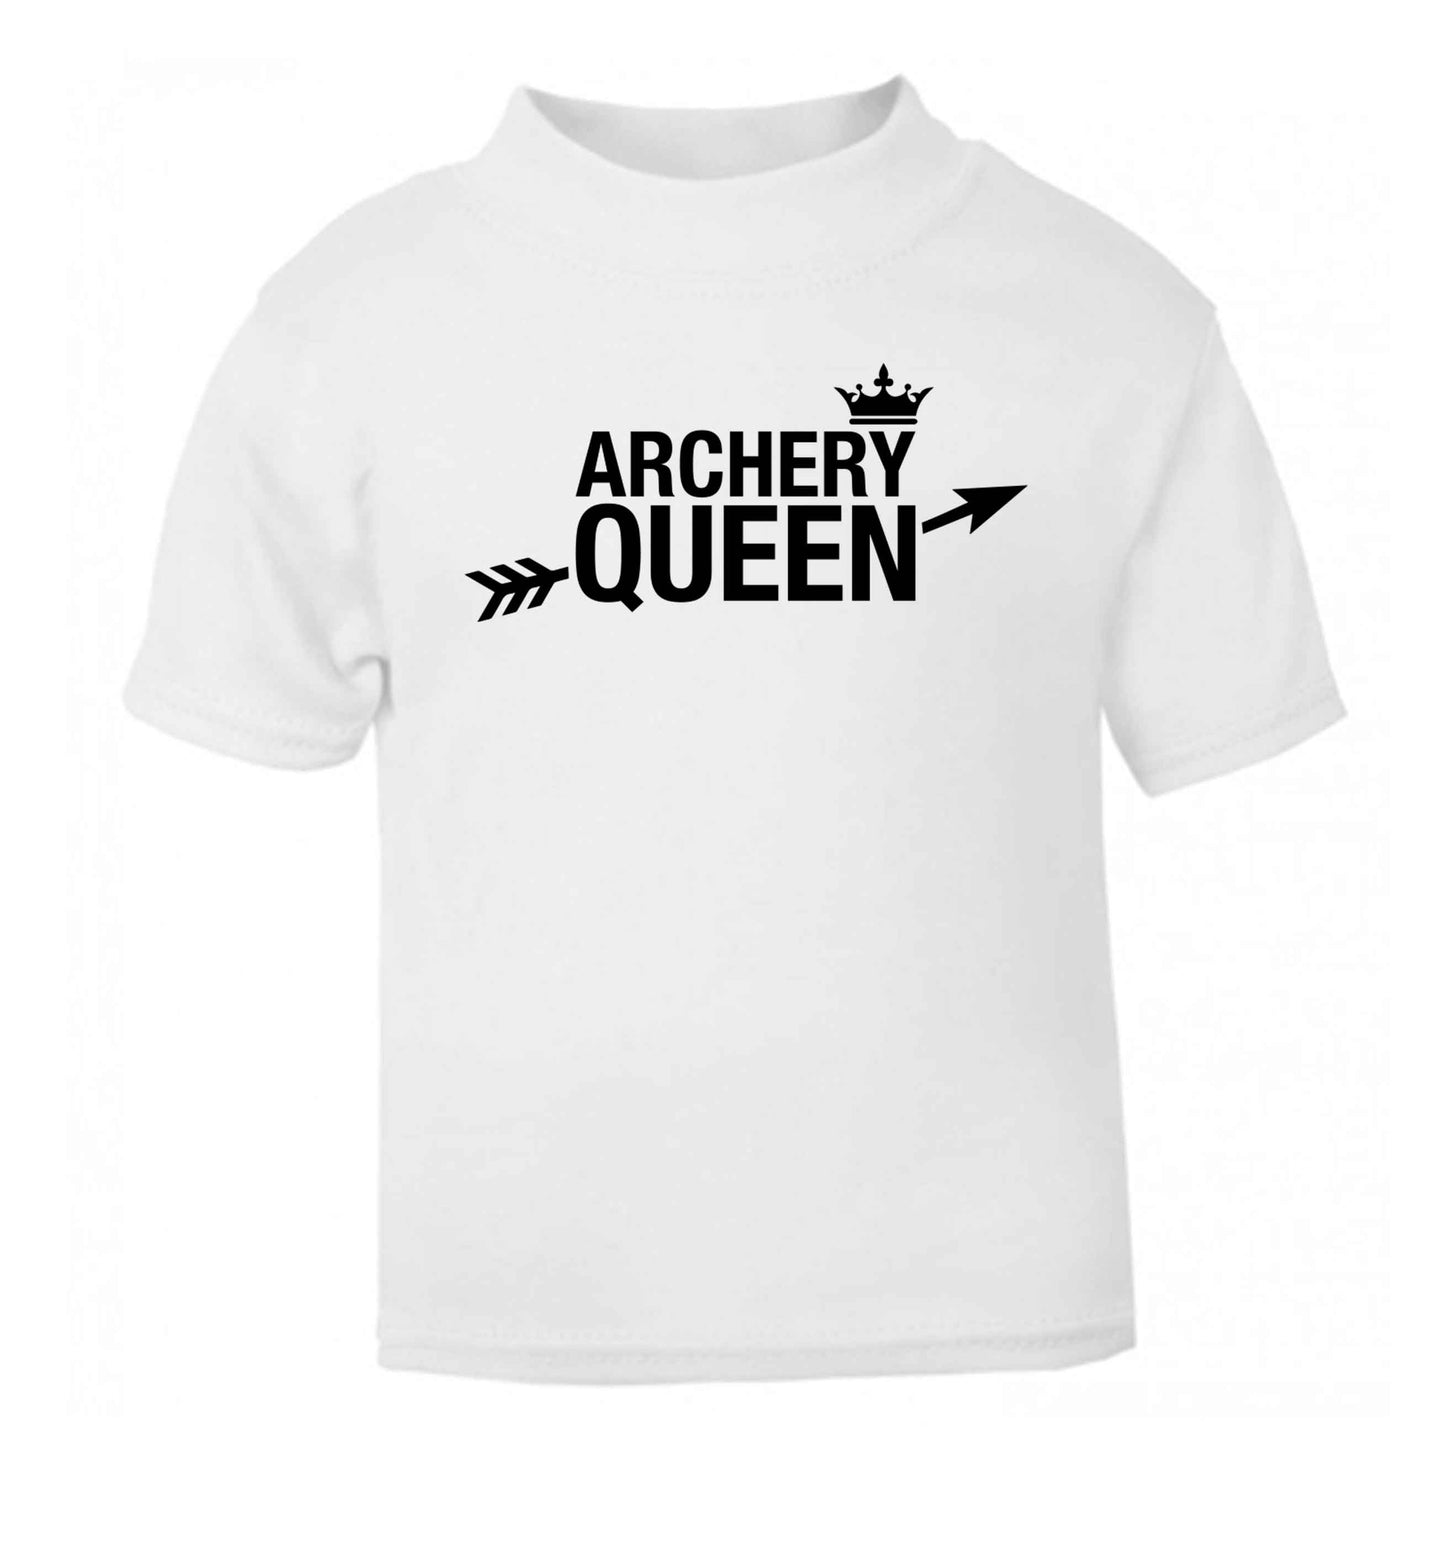 Archery queen white Baby Toddler Tshirt 2 Years